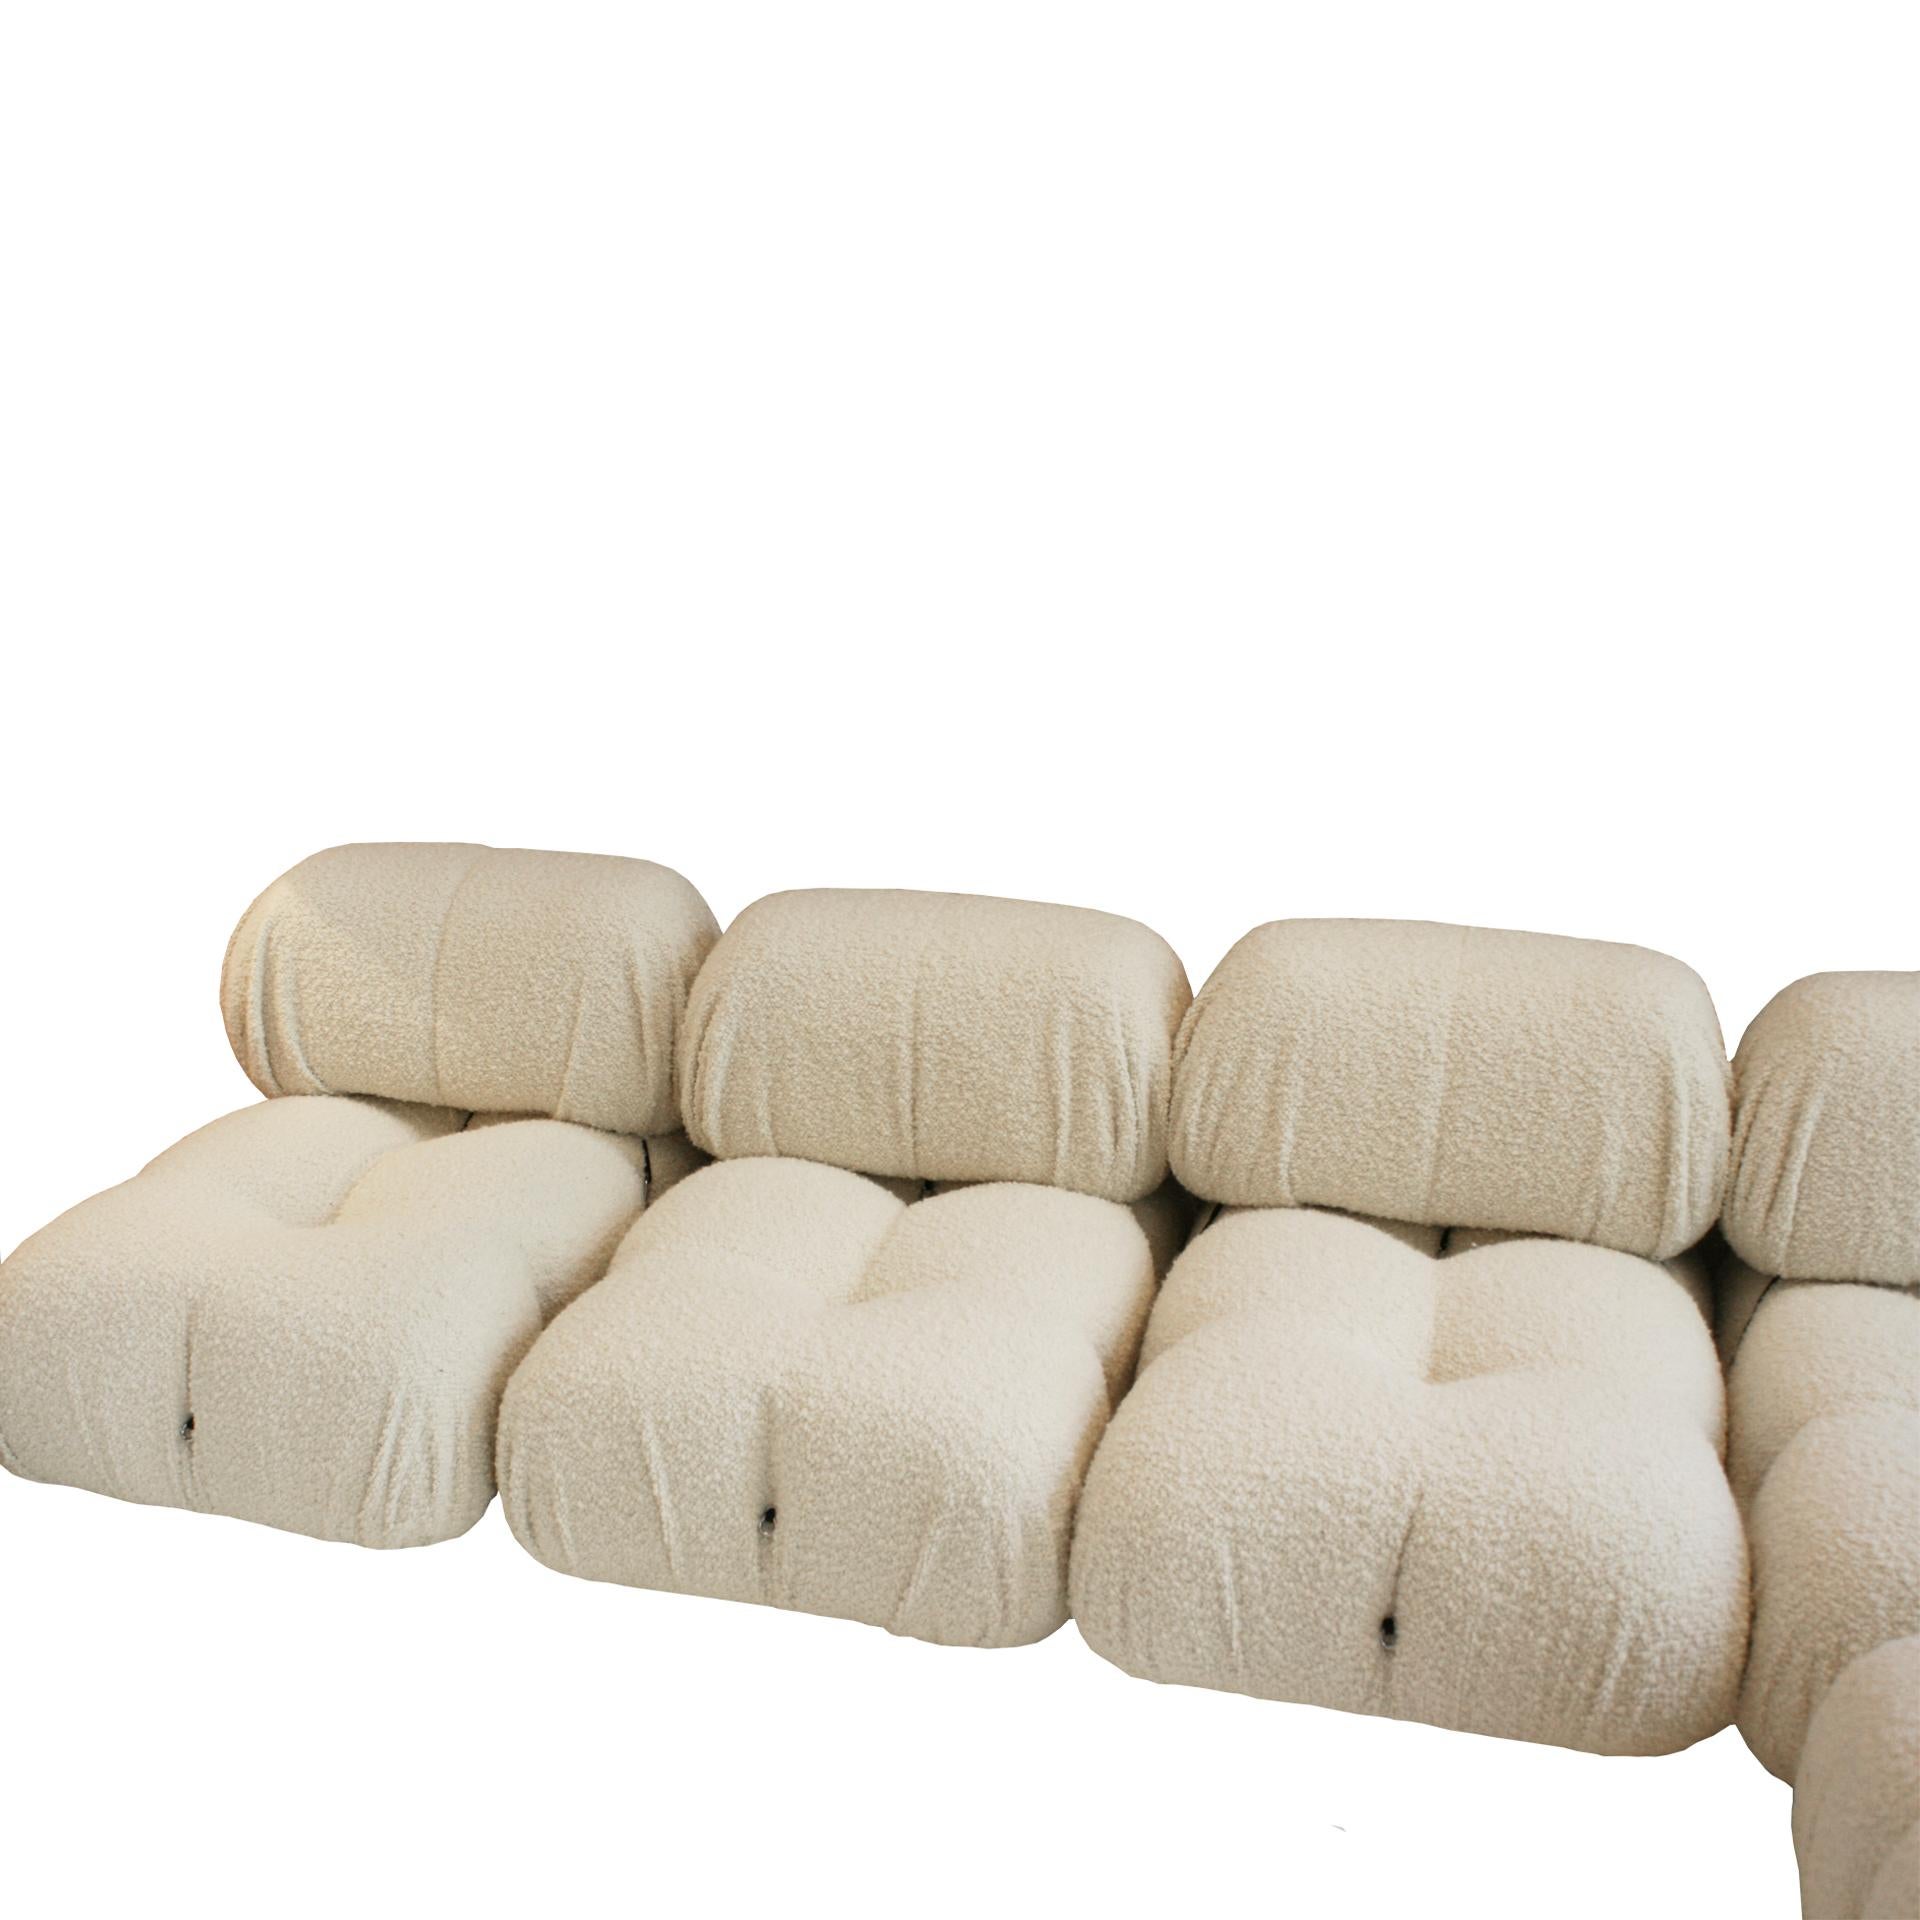 mario bellini camaleonda sofa white set